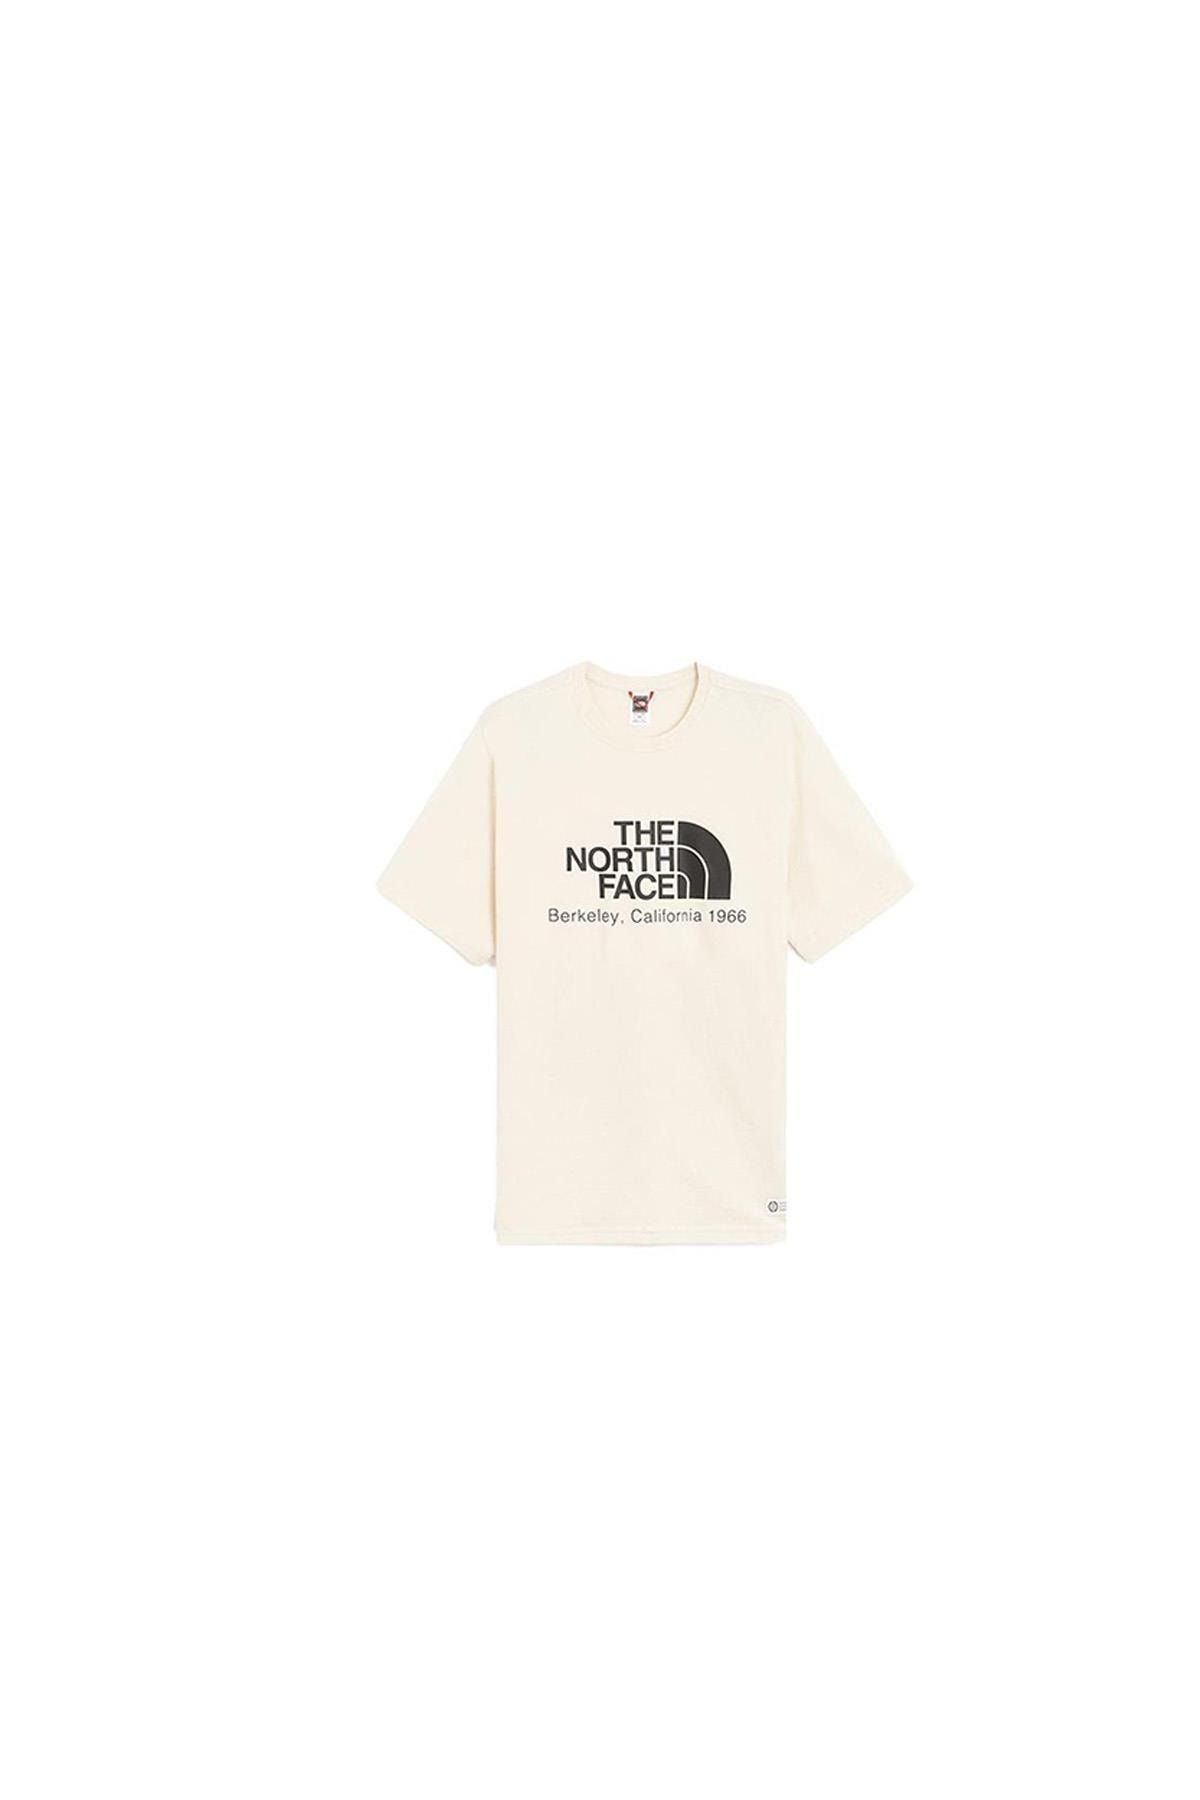 The North Face M Berkeley Calıfornıa Tee- In Scrap Mat T-shirt Nf0a55gele71